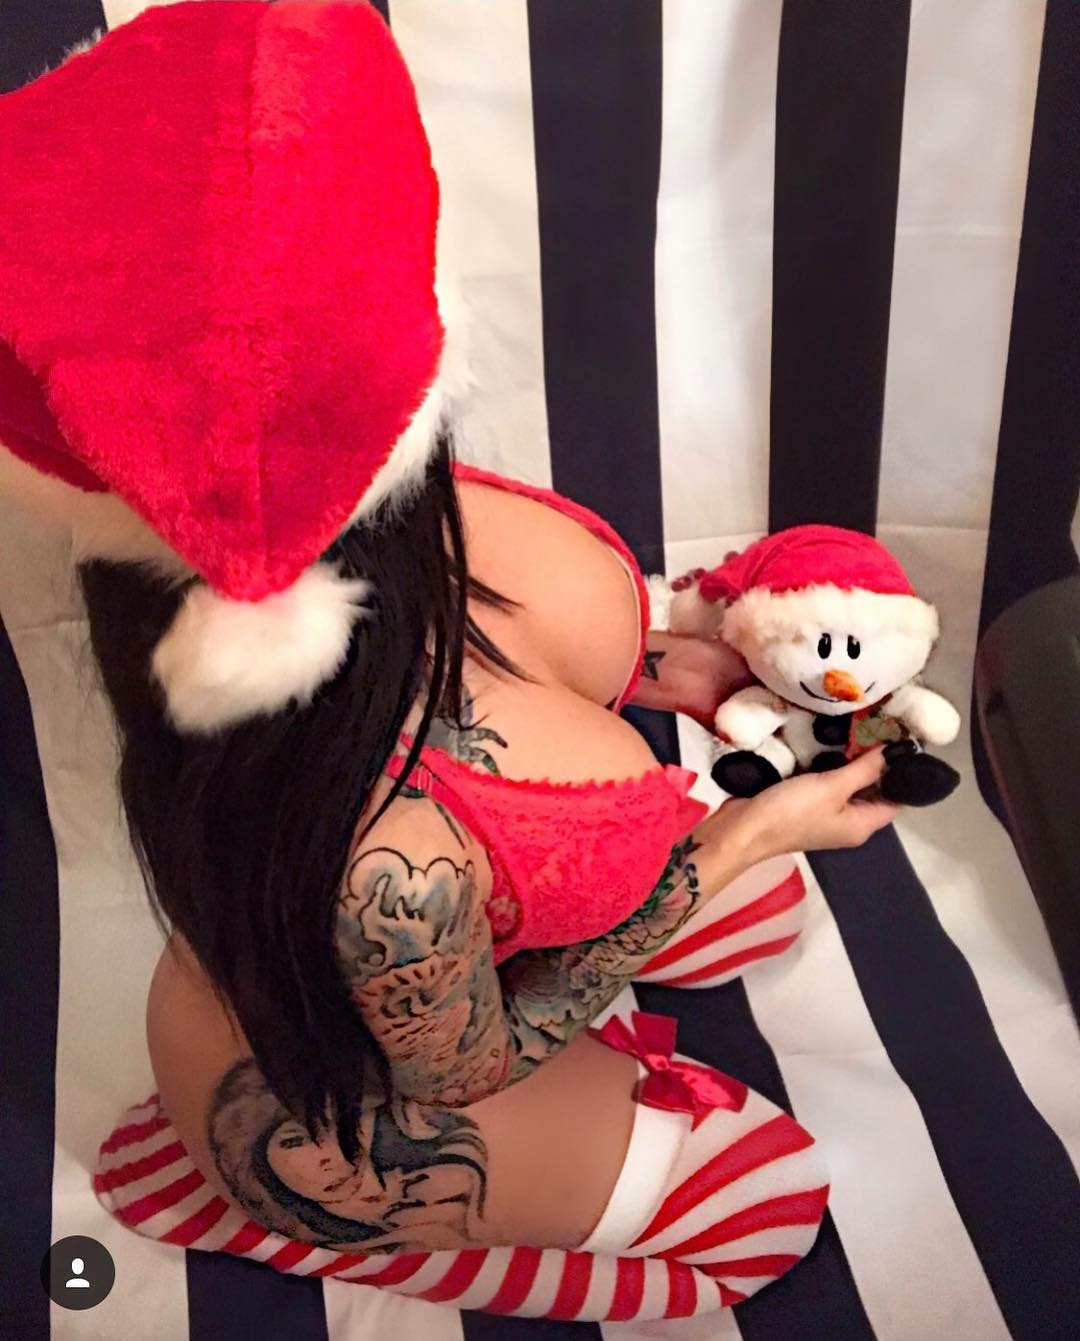 BEST 20 Christmas Photos - Sexy girls wearing stockings